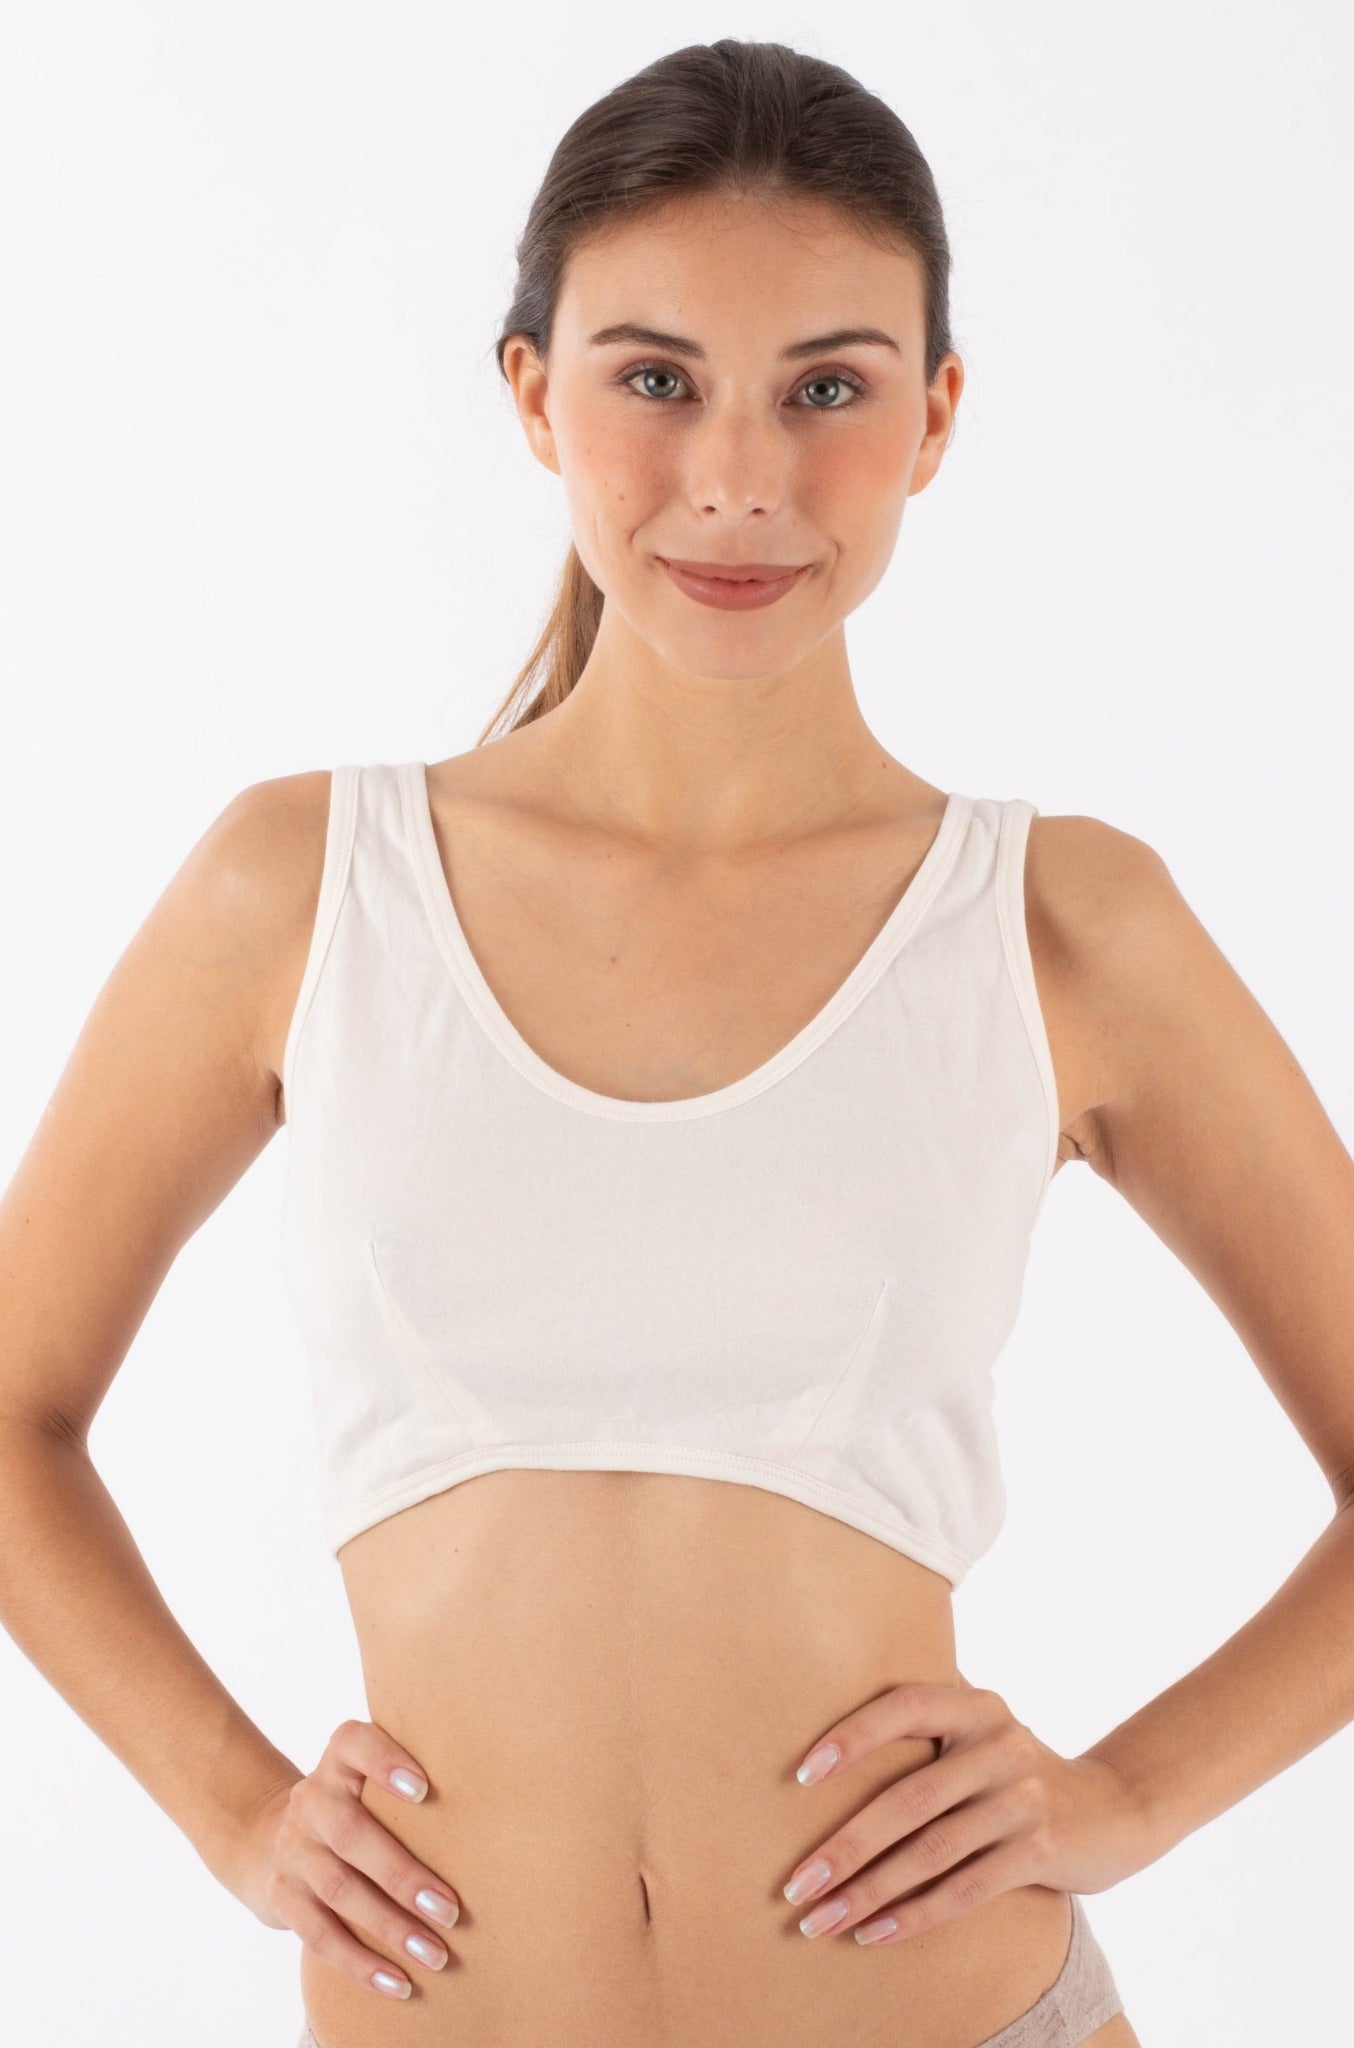 Cotton Bra Liners Cool Support Comfort Prevent Irritation Redness Sweat  Moisture